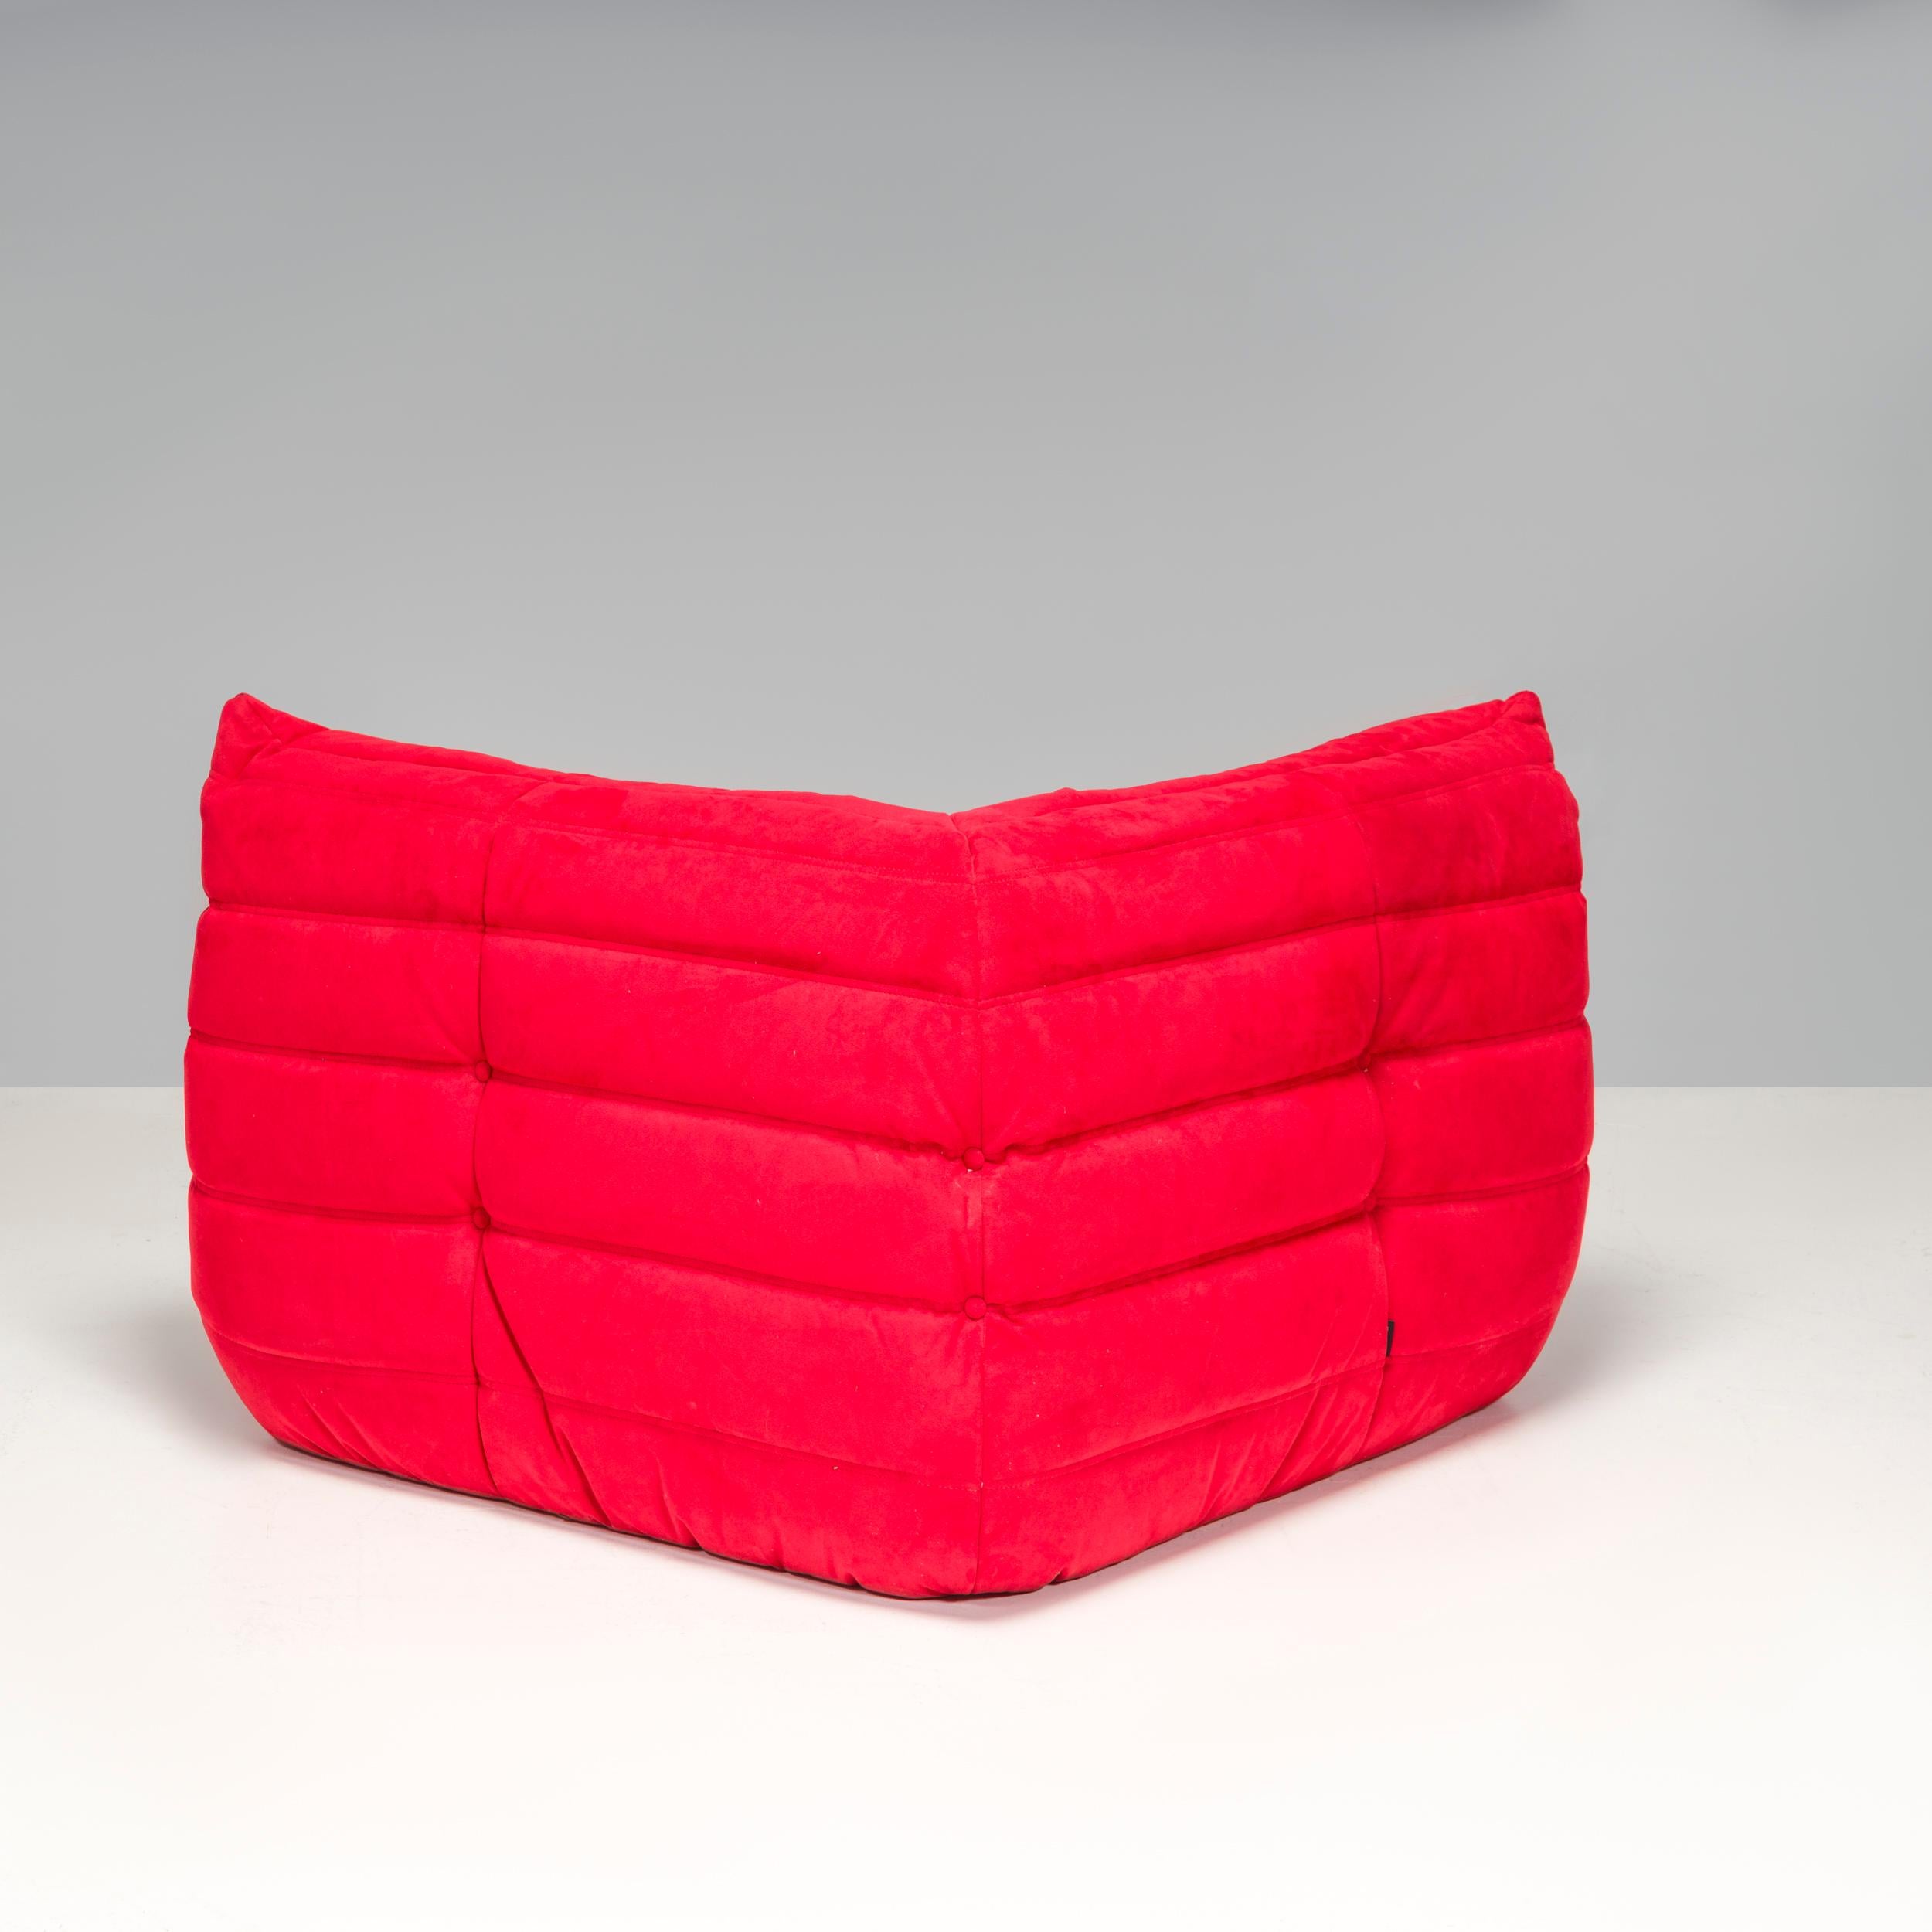 Ligne Roset by Michel Ducaroy Togo Red Alcantara Sectional Sofa, Set of 3 For Sale 2